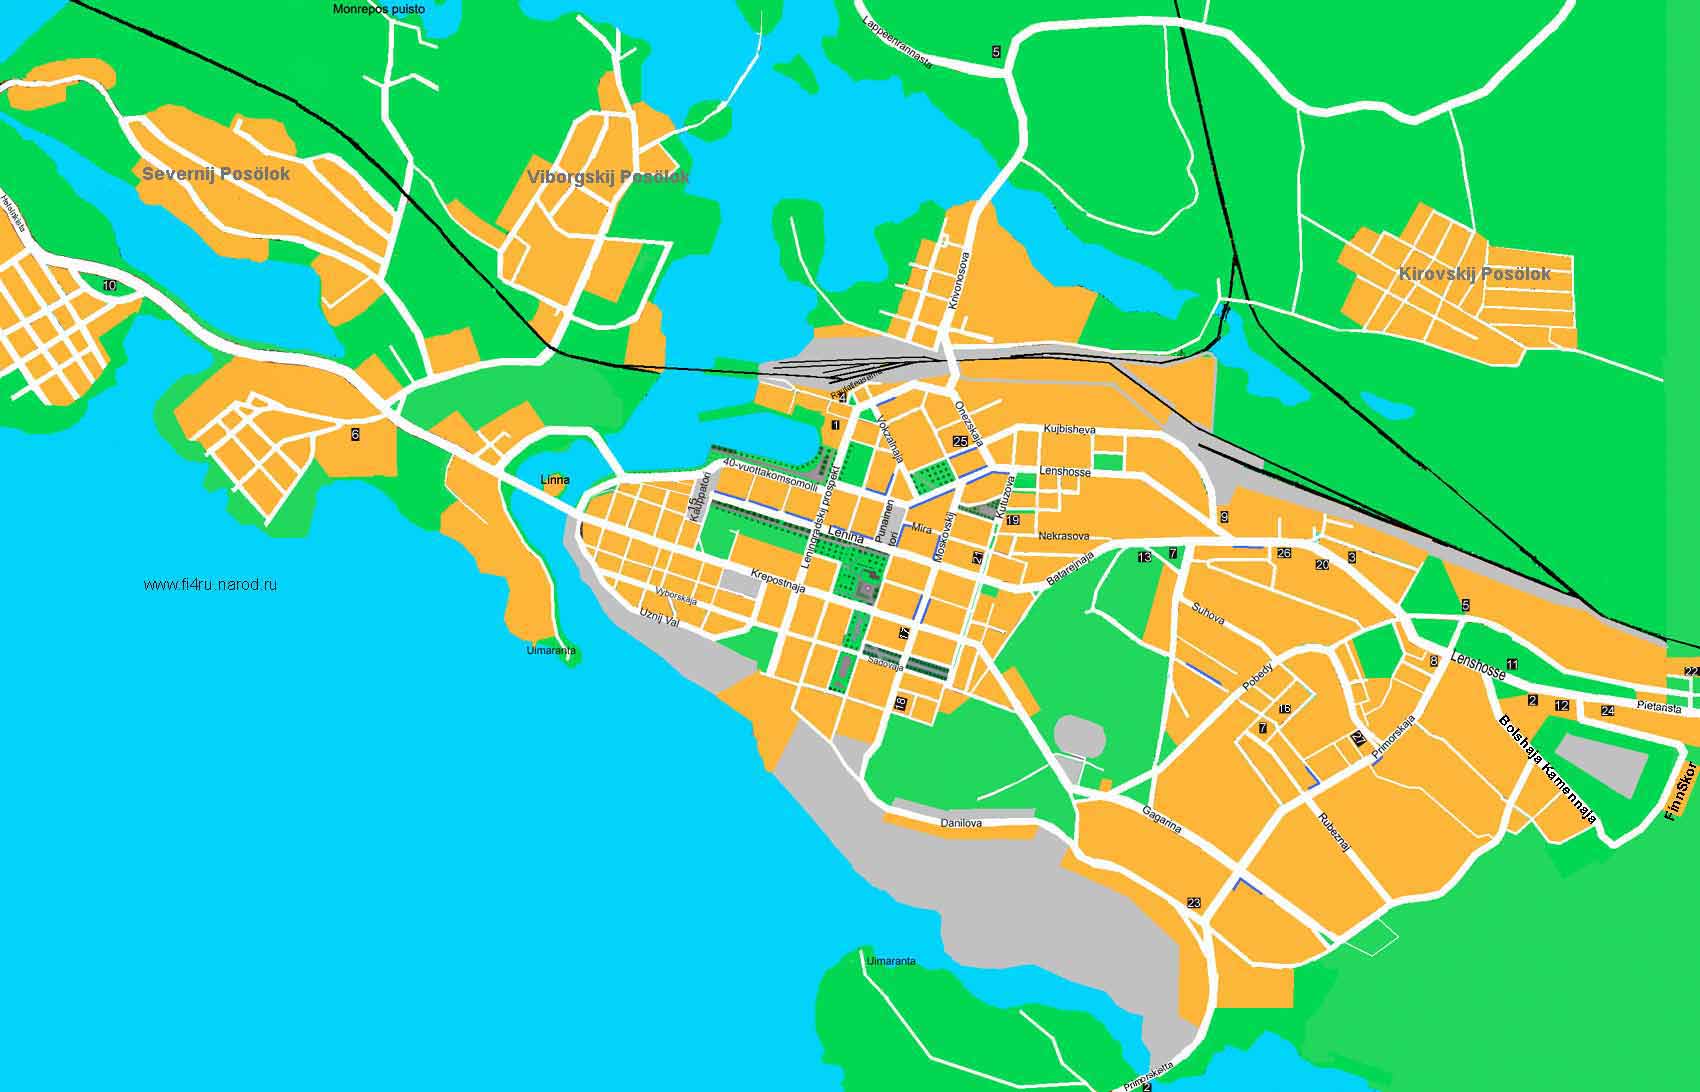 Map of Vyborg.